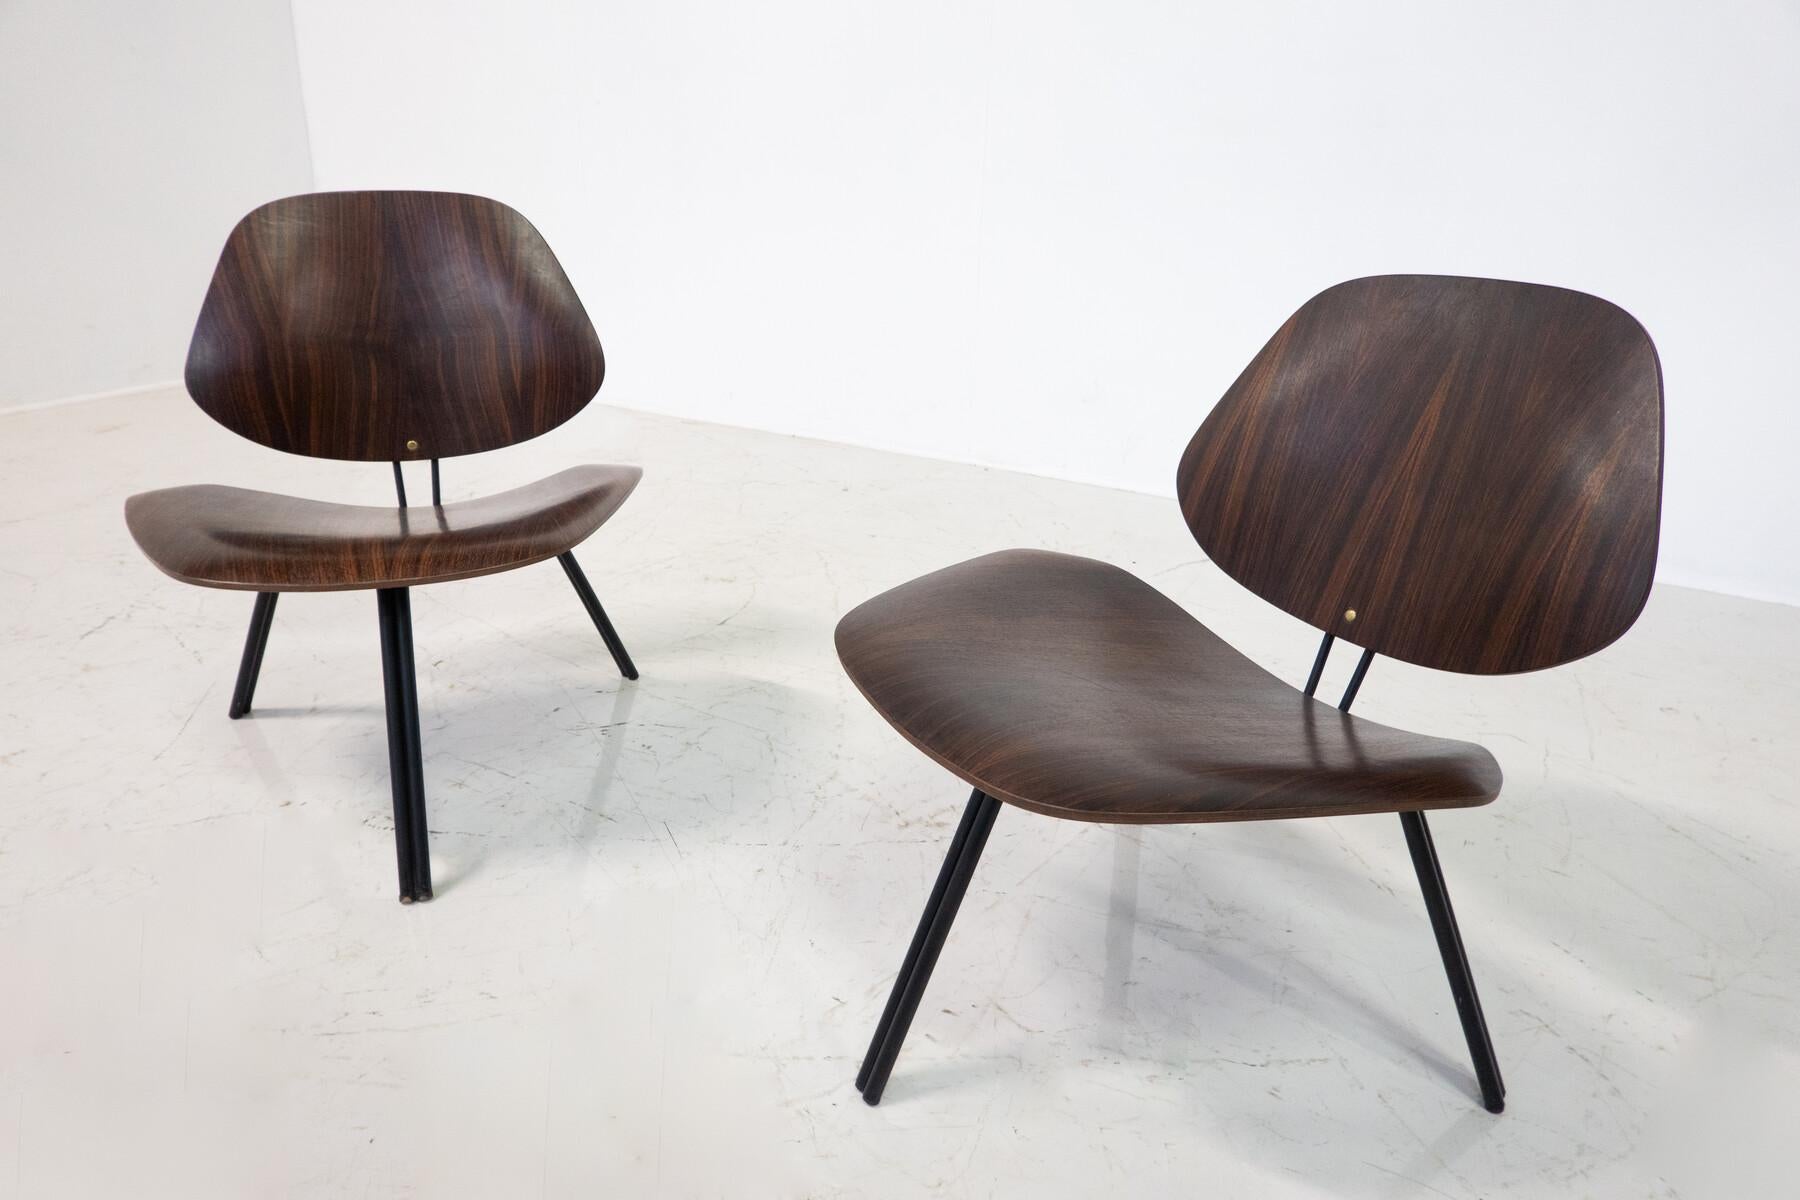 Mid-20th Century Mid-Century Modern P31 Chairs by Osvaldo Borsani, Tecno, 1950s For Sale